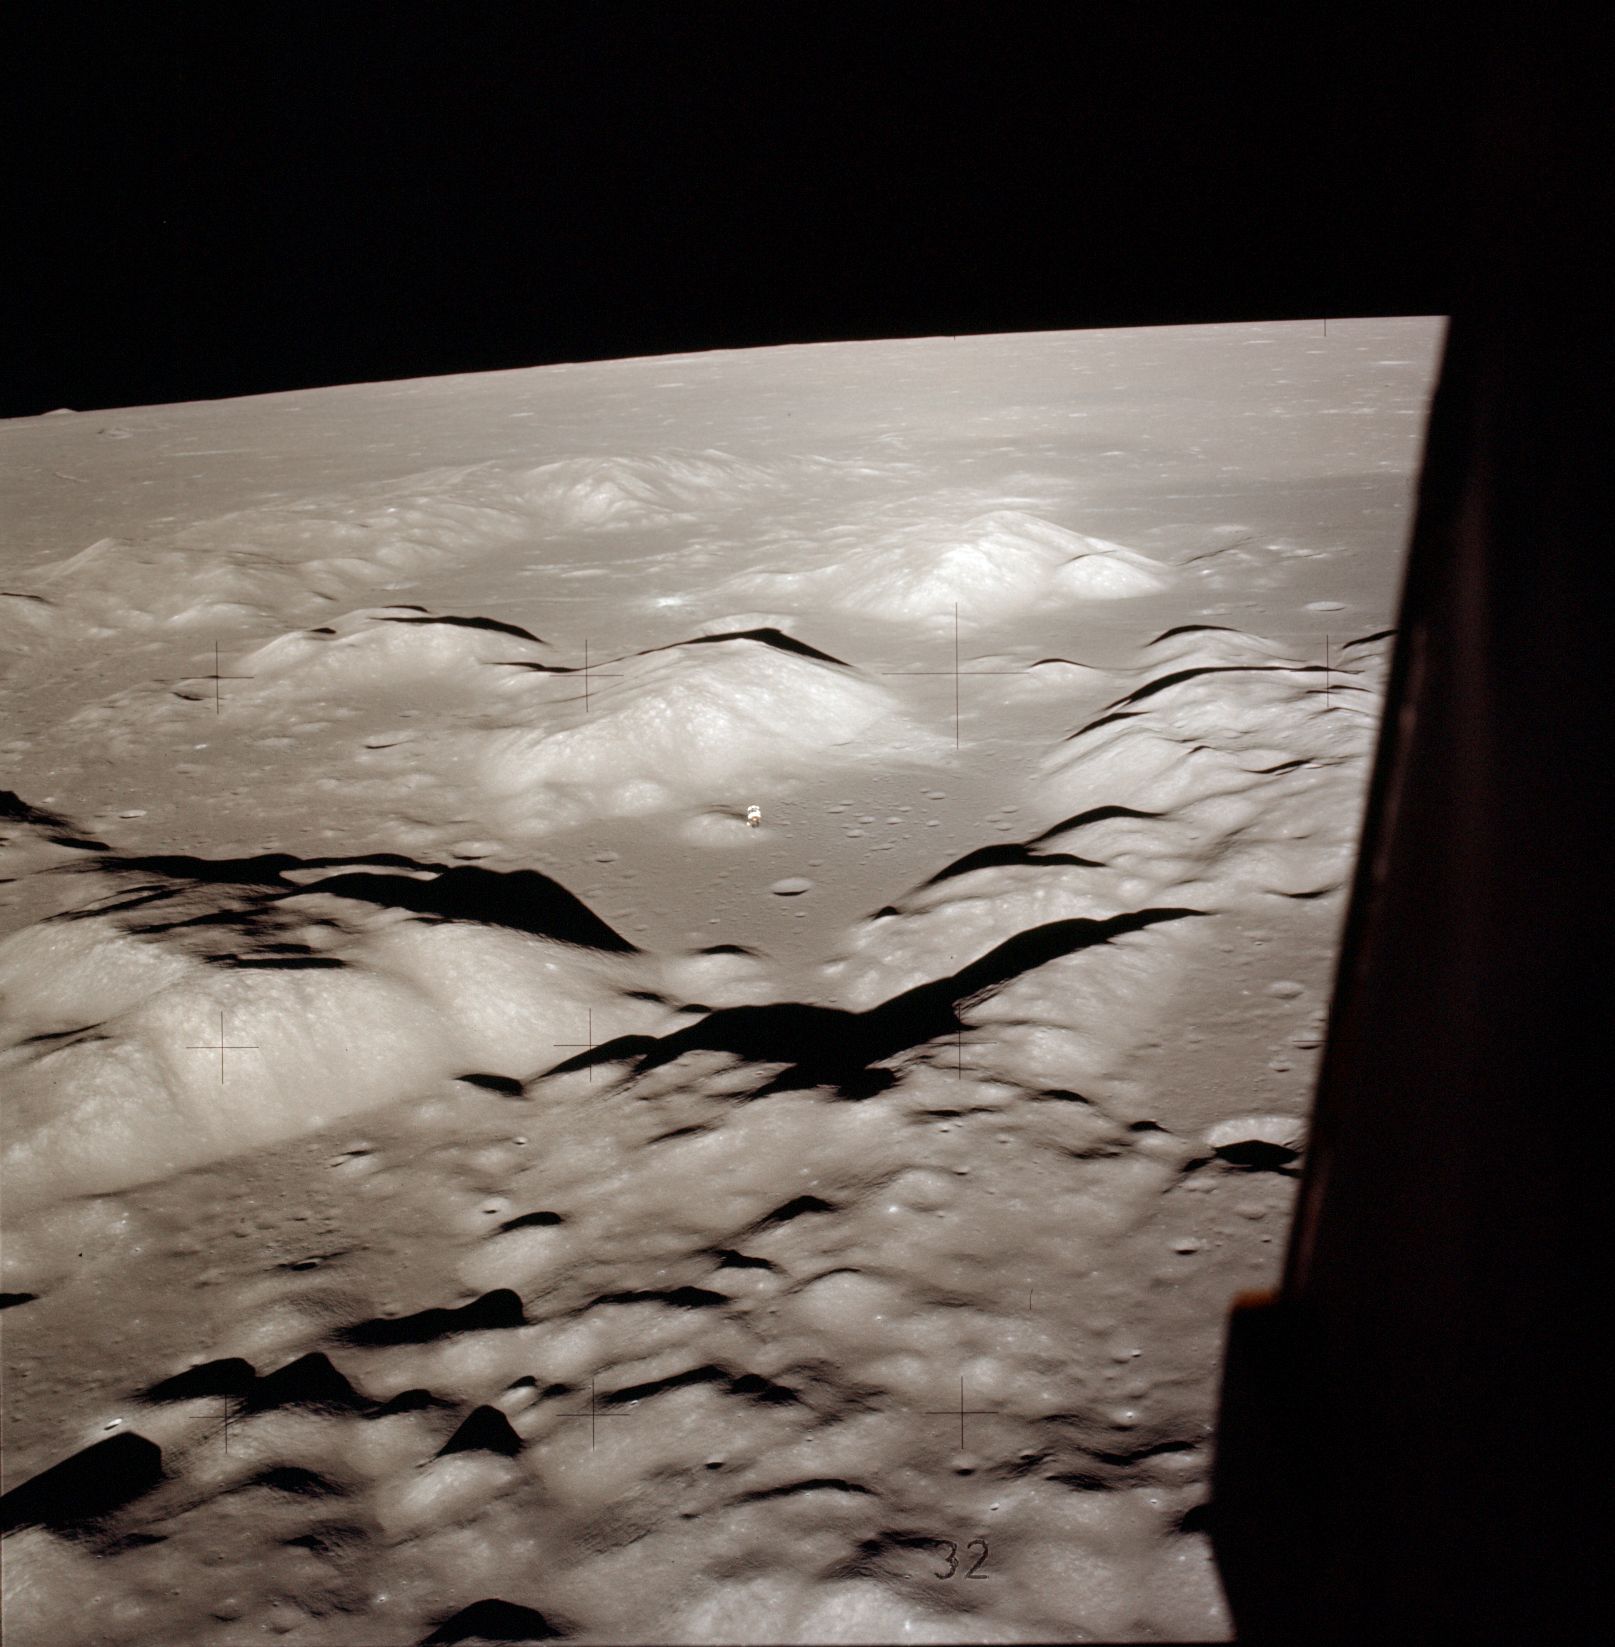 Apollo 17 CM above Taurus Littrow